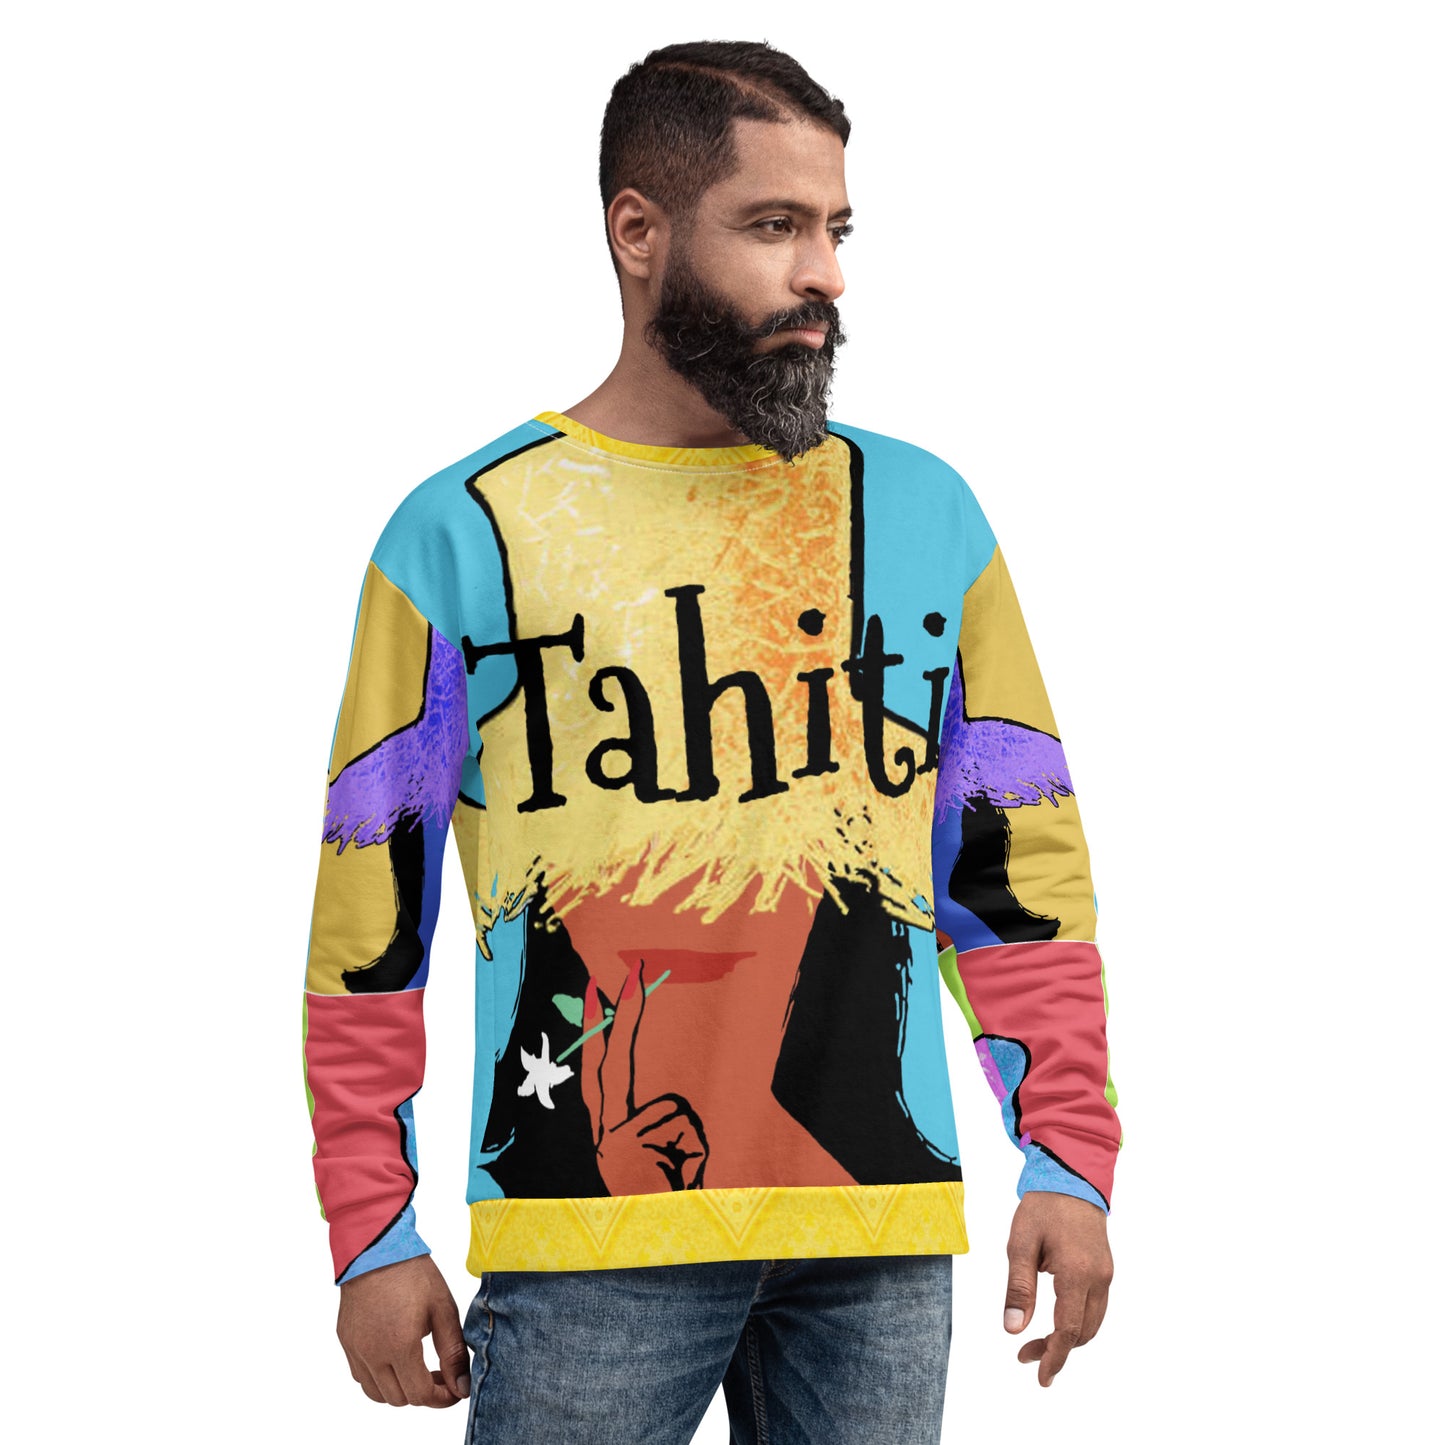 Tahiti Girl Party Sweatshirt